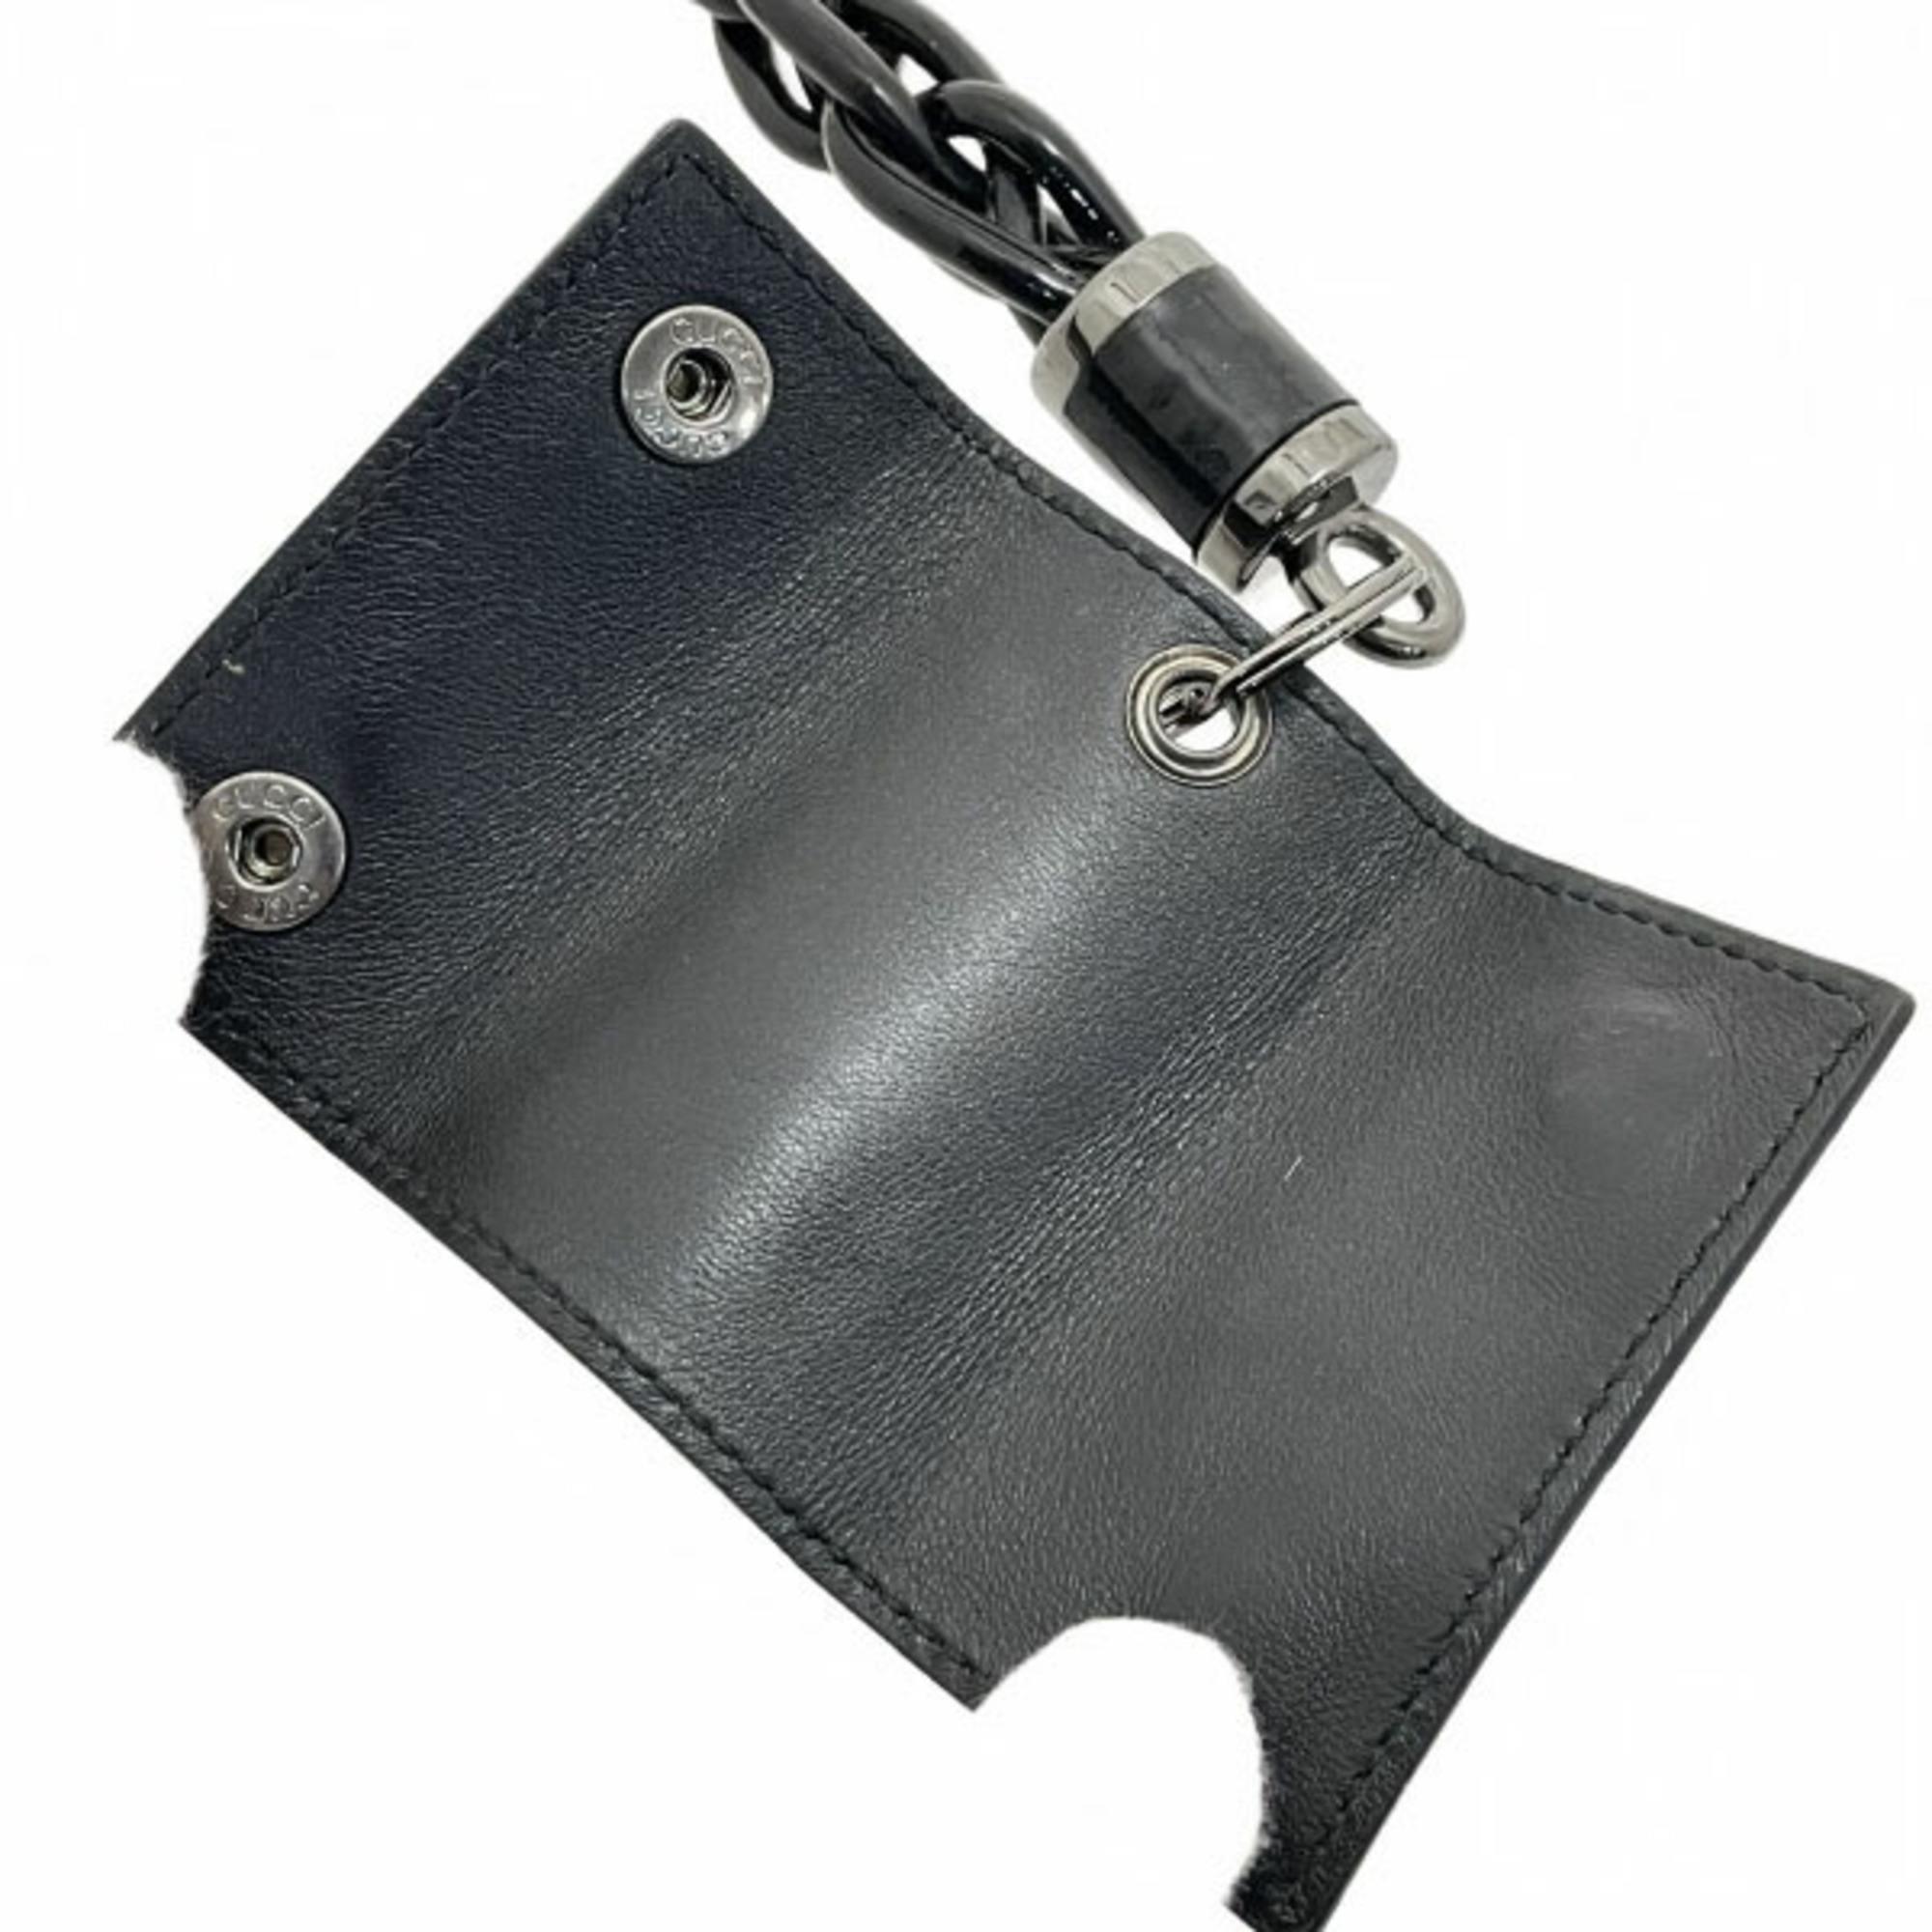 Gucci keychain chain charm enamel black GUCCI key ring bag KAH-11170